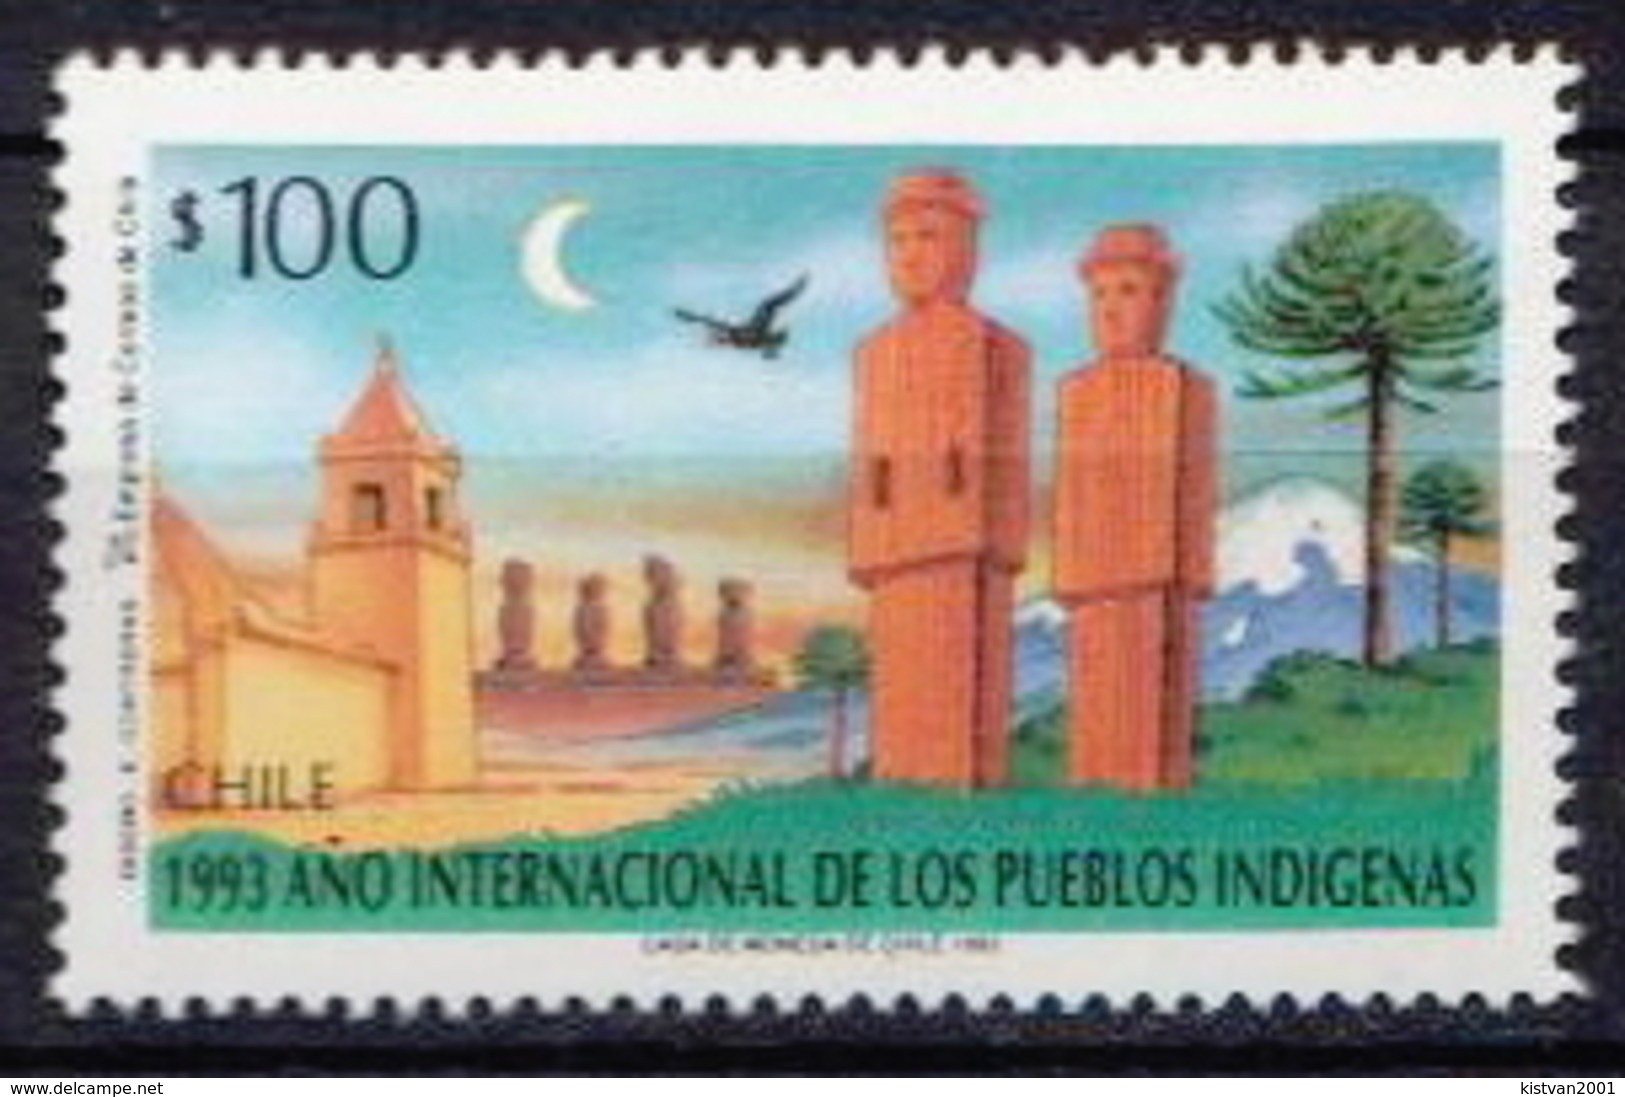 Chile MNH Stamp - Chile